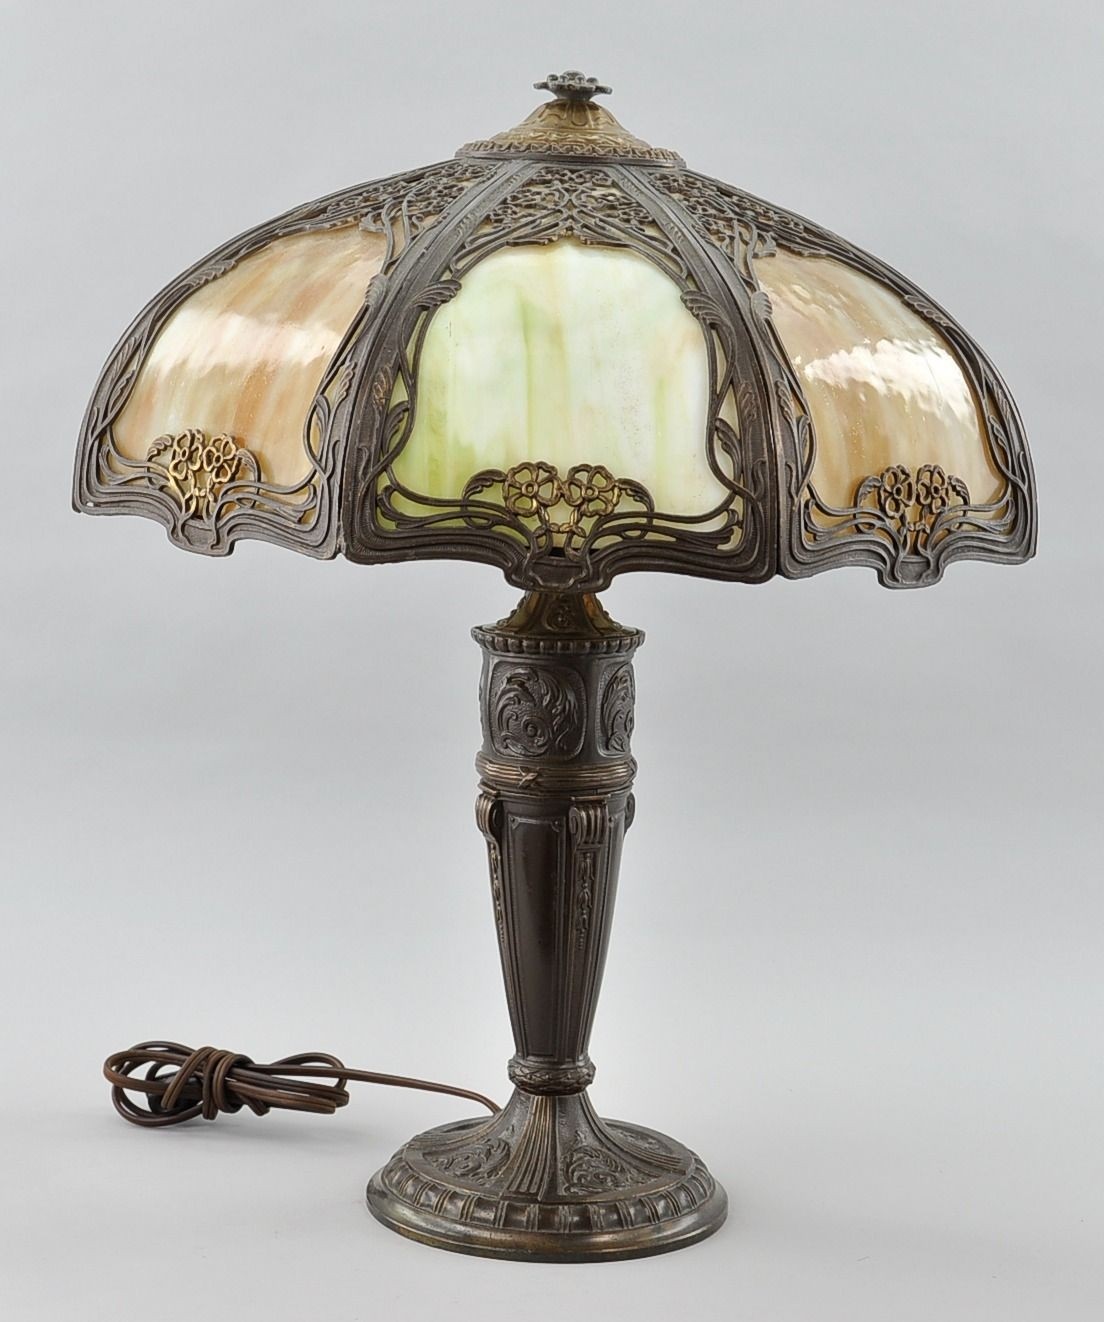 An antique slag glass lamp and shade bronze tone cast